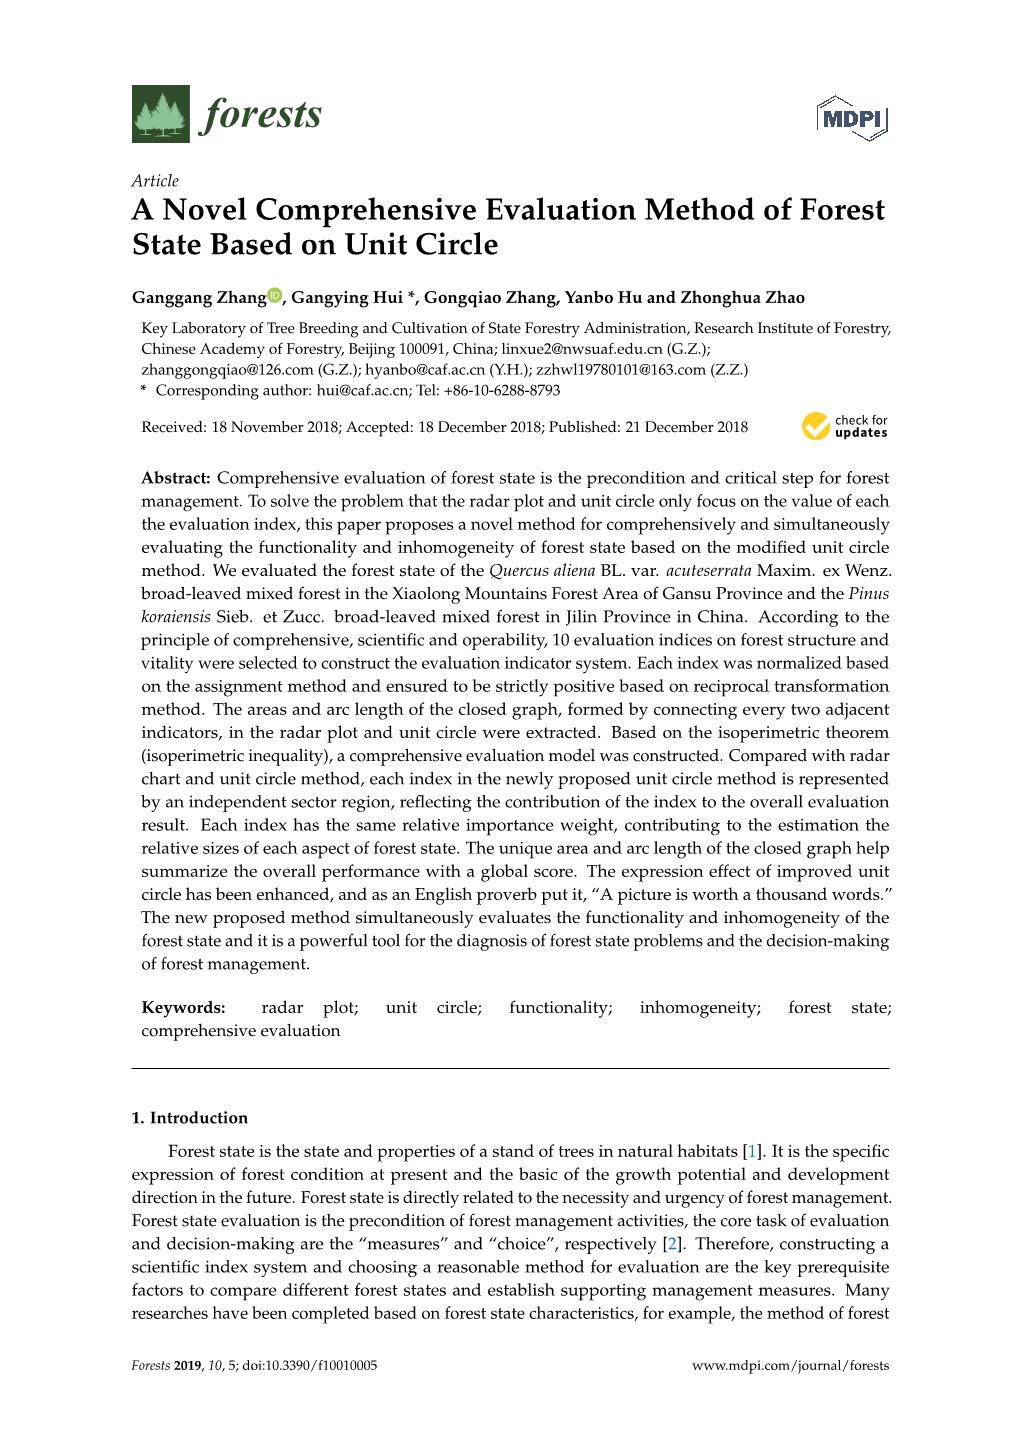 A Novel Comprehensive Evaluation Method of Forest State Based on Unit Circle